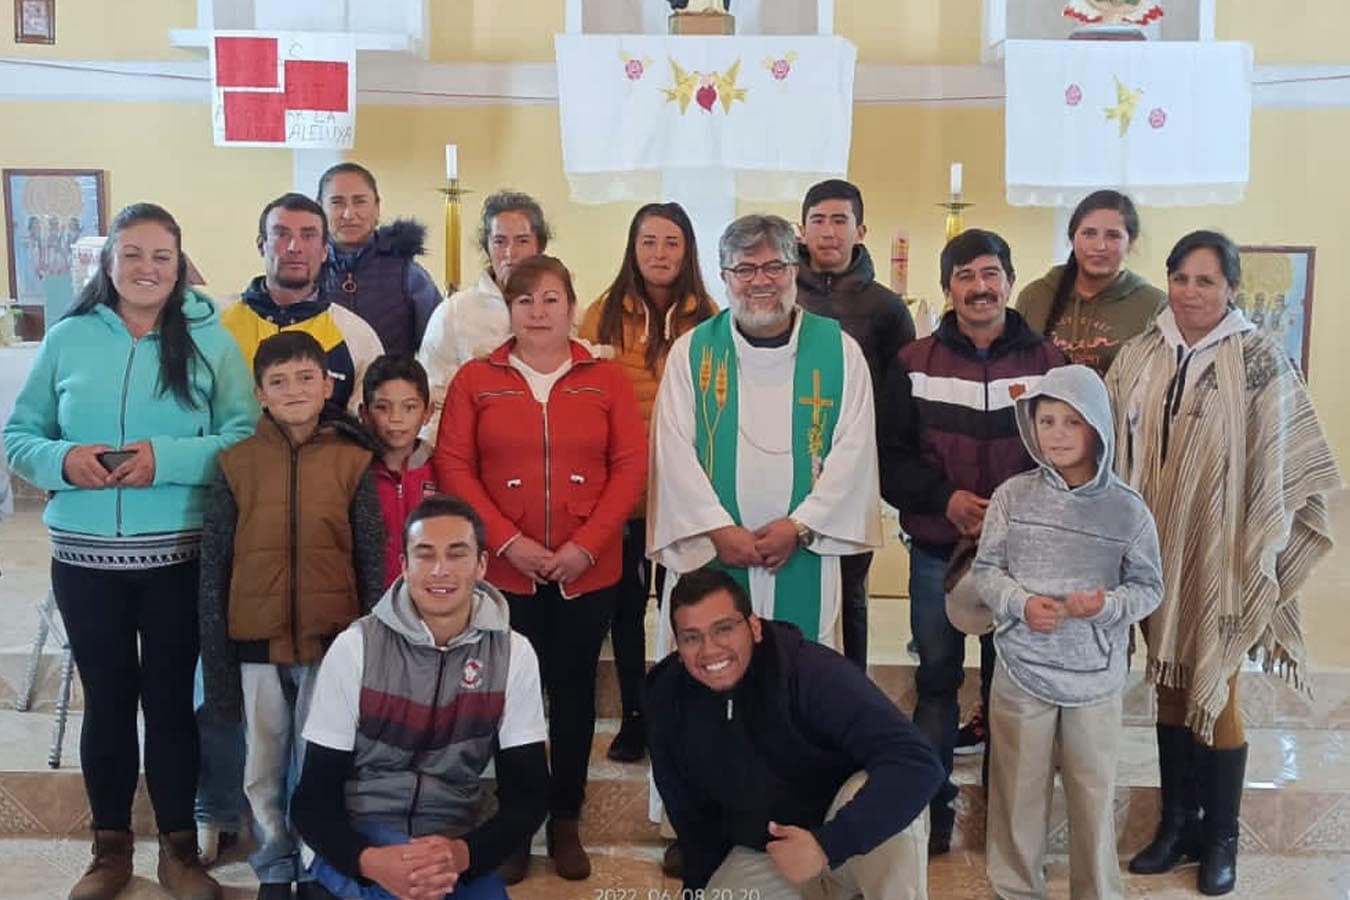 S. Juan en parroquia en Aguascalientes